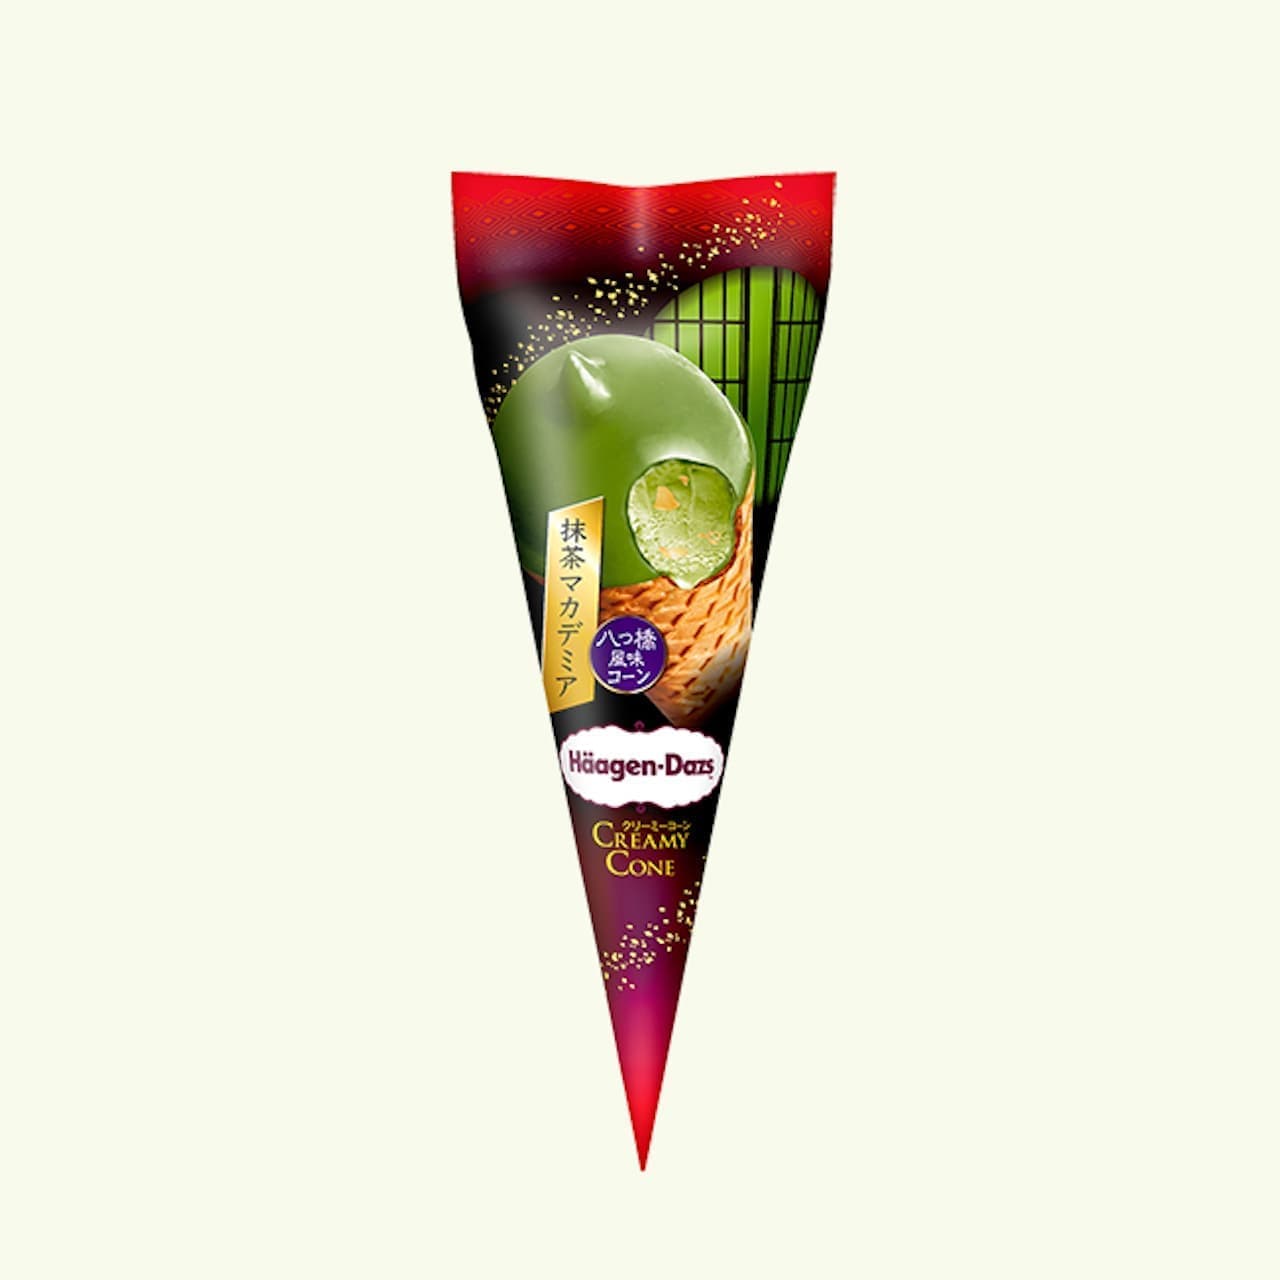 Haagen-Dazs "Creamy Cone Green Tea Macadamia